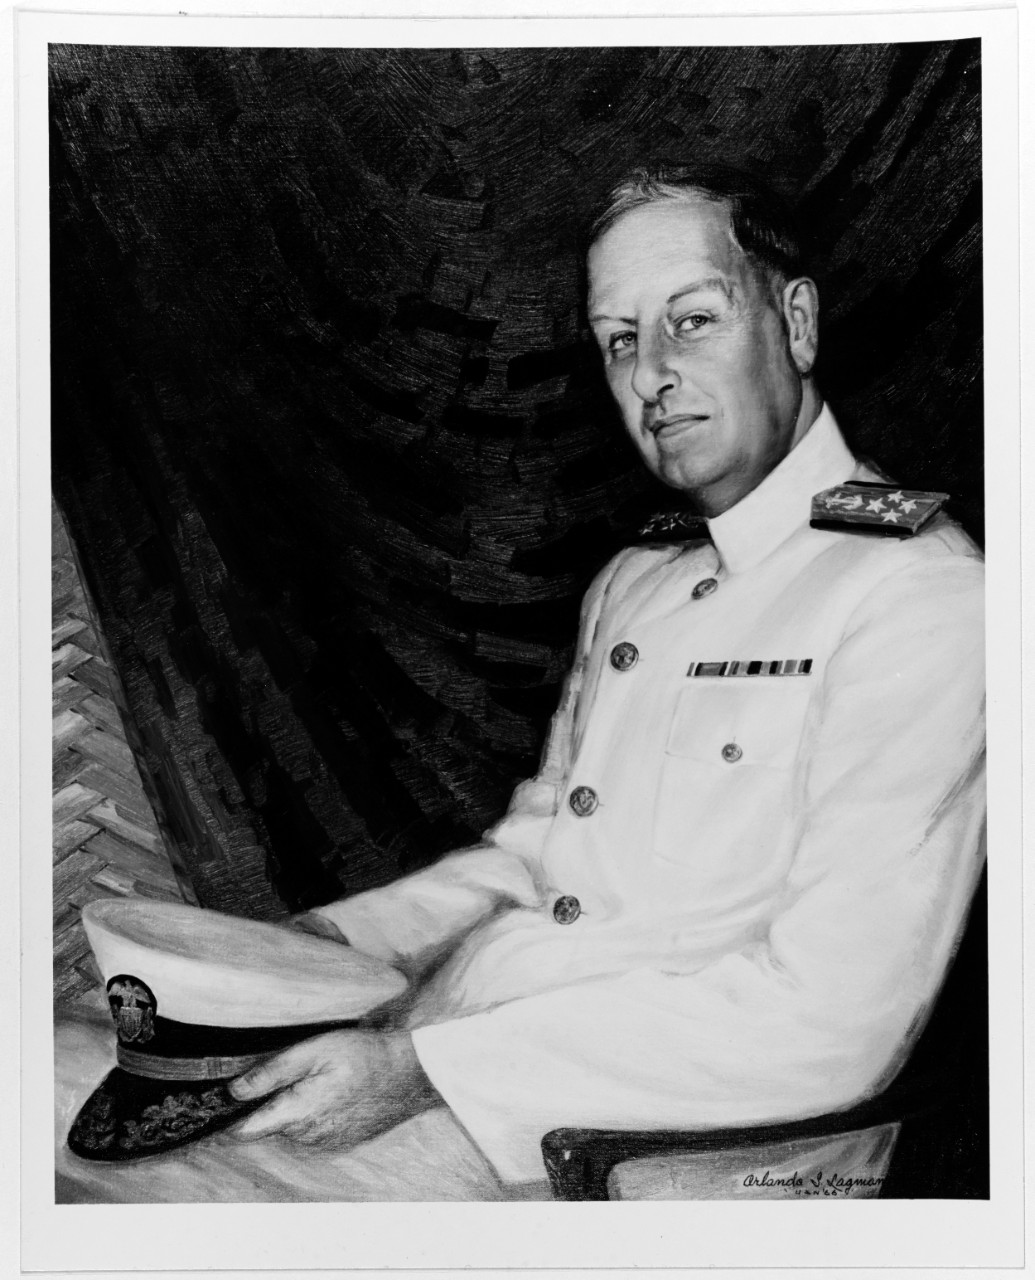 Husband E. Kimmel, Admiral, USN